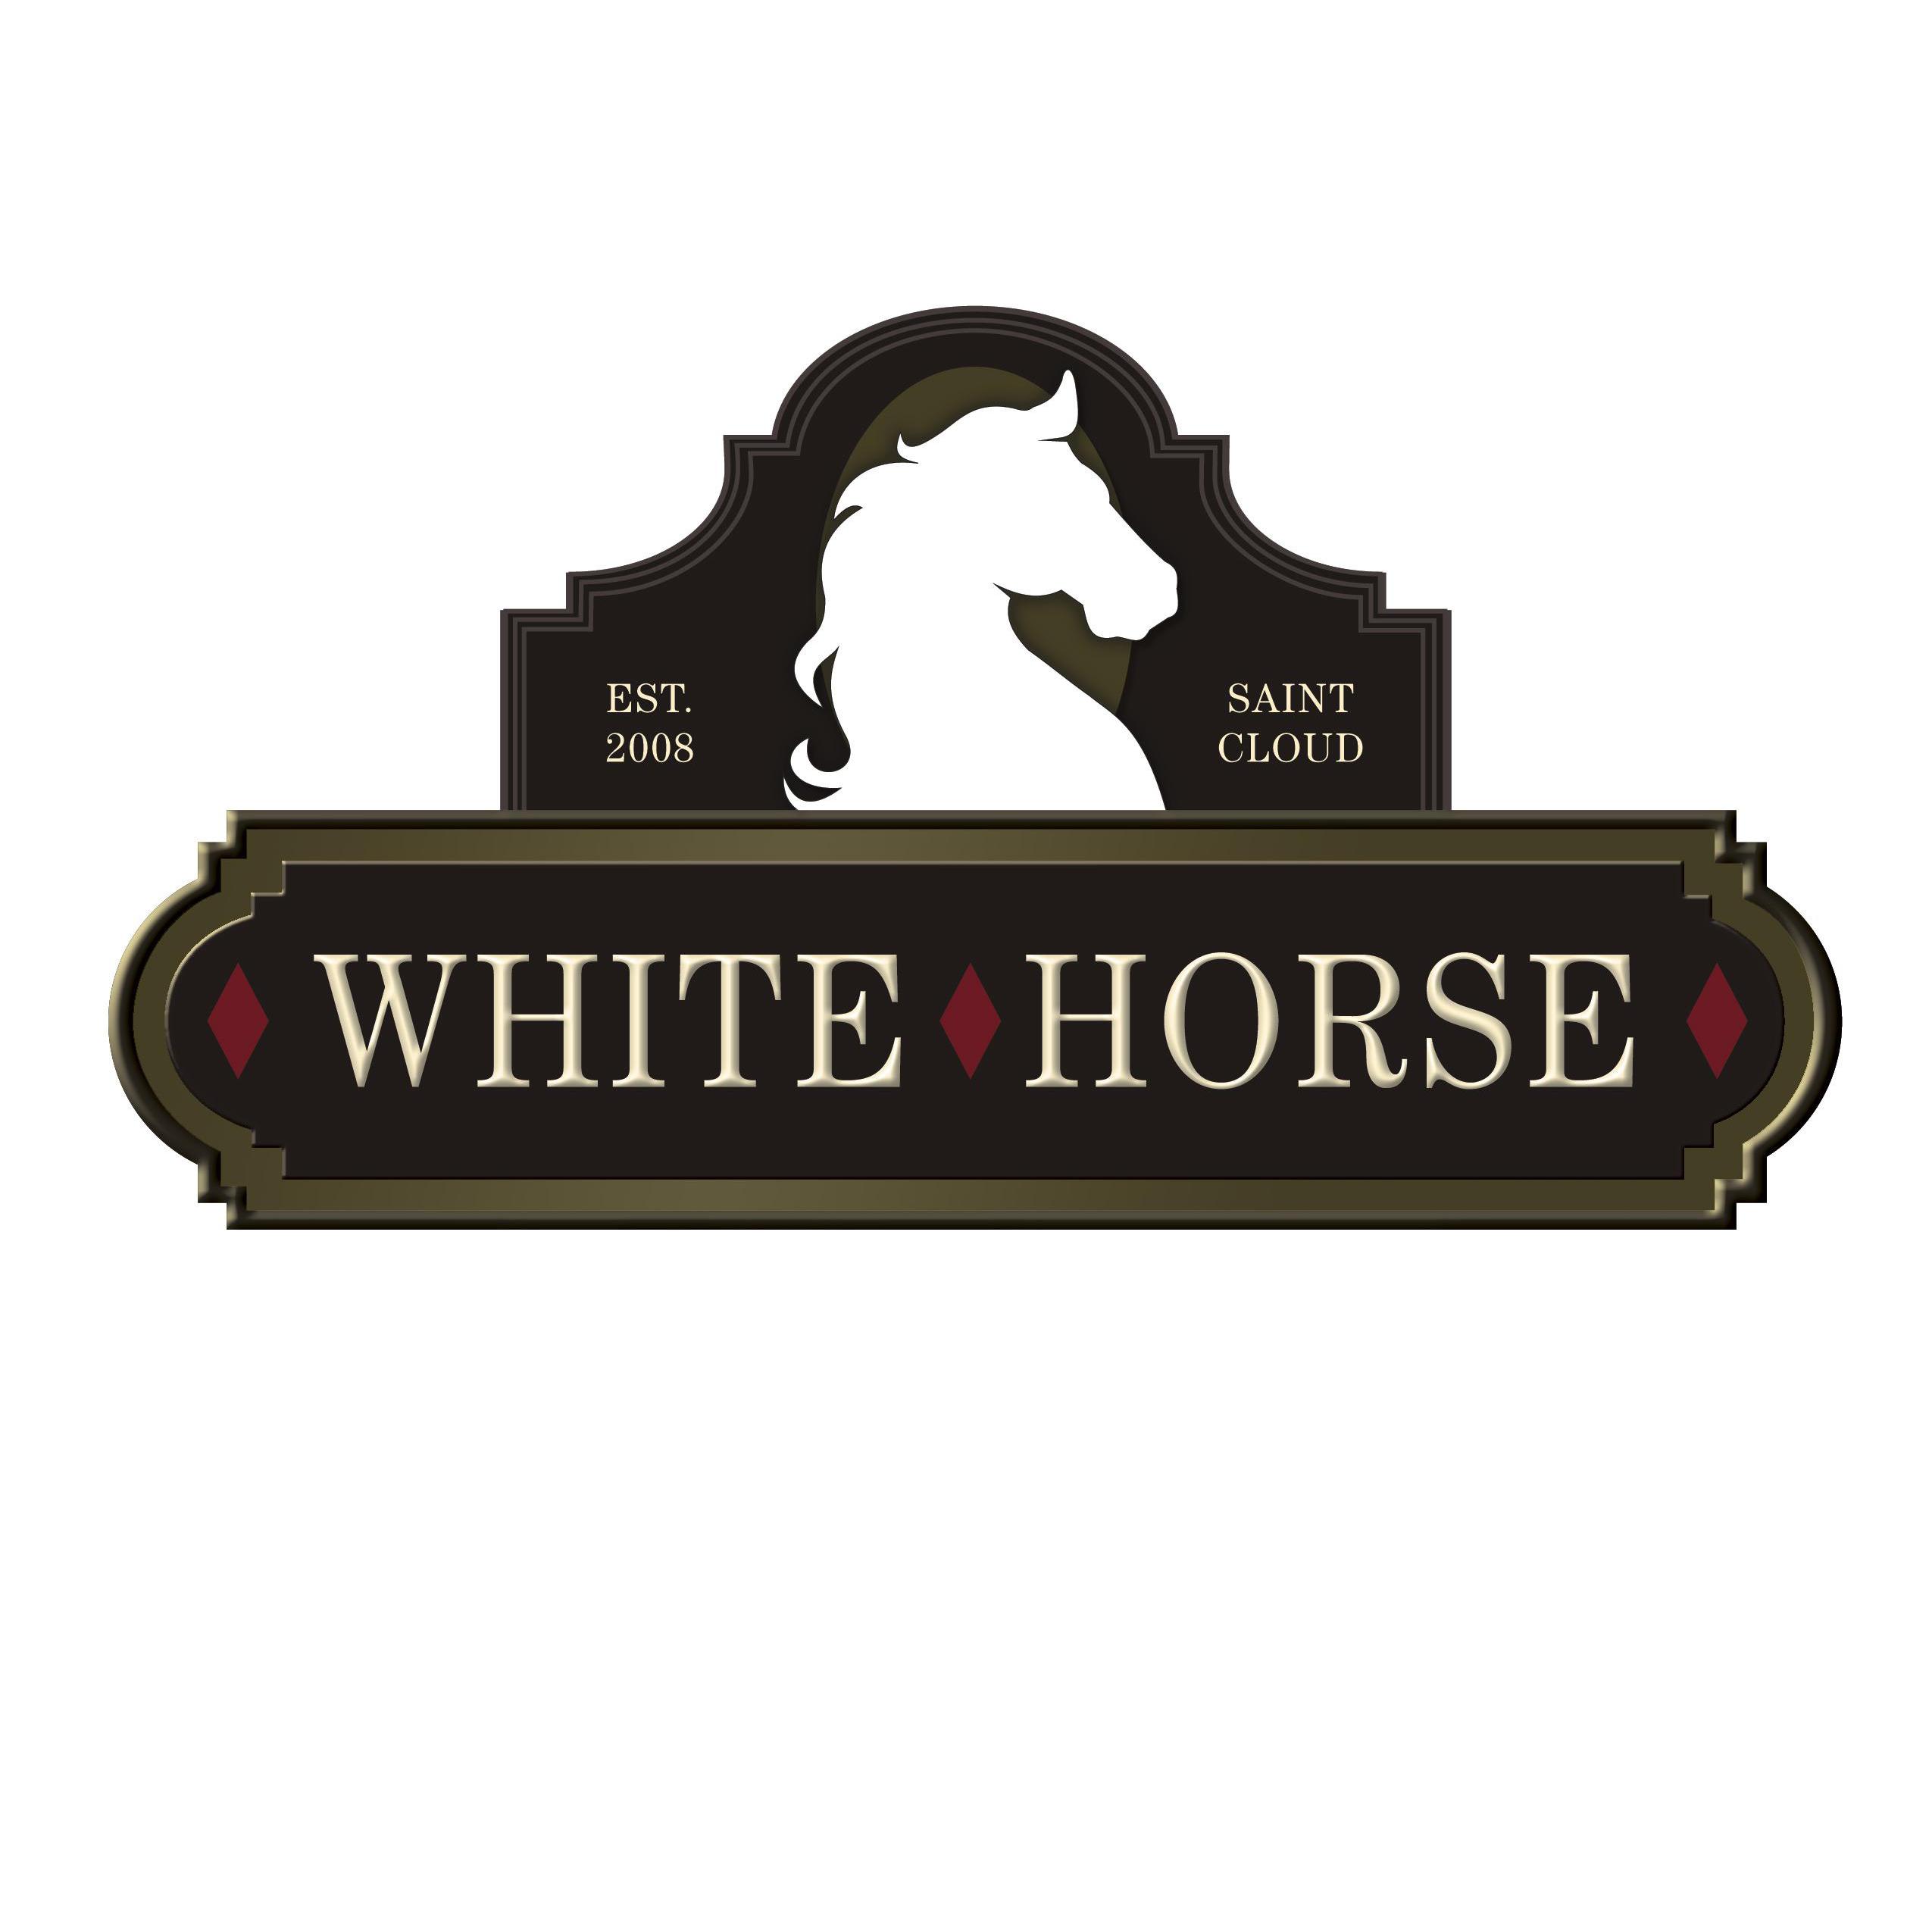 The White Horse Restaurant & Bar - St. Cloud, MN 56301 - (320)257-7775 | ShowMeLocal.com